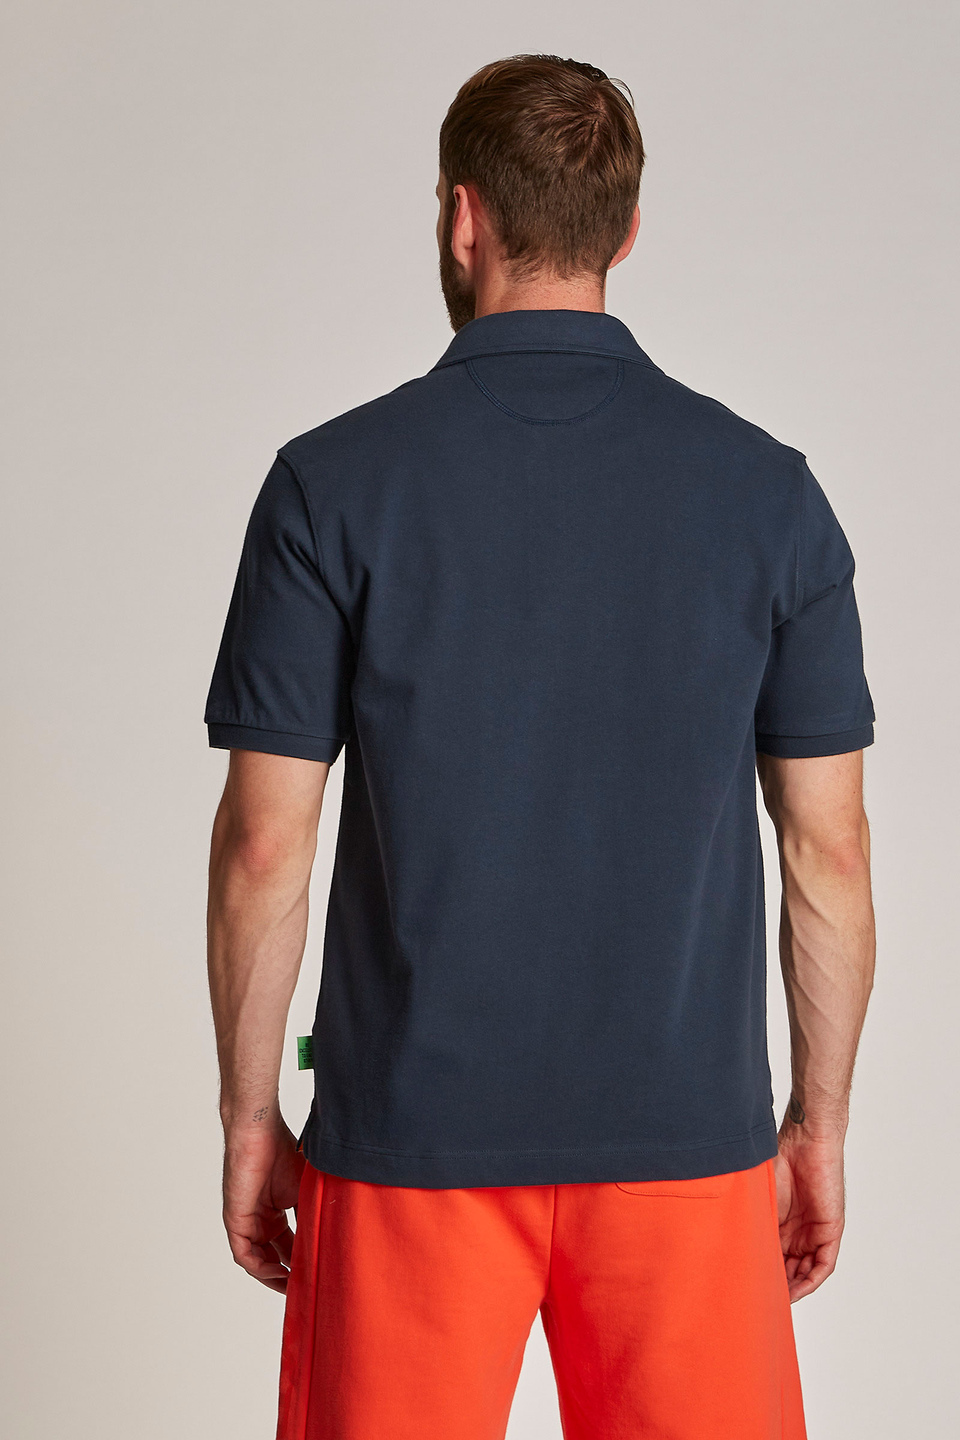 Herren-Poloshirt mit kurzem Arm, oversized Modell - La Martina - Official Online Shop